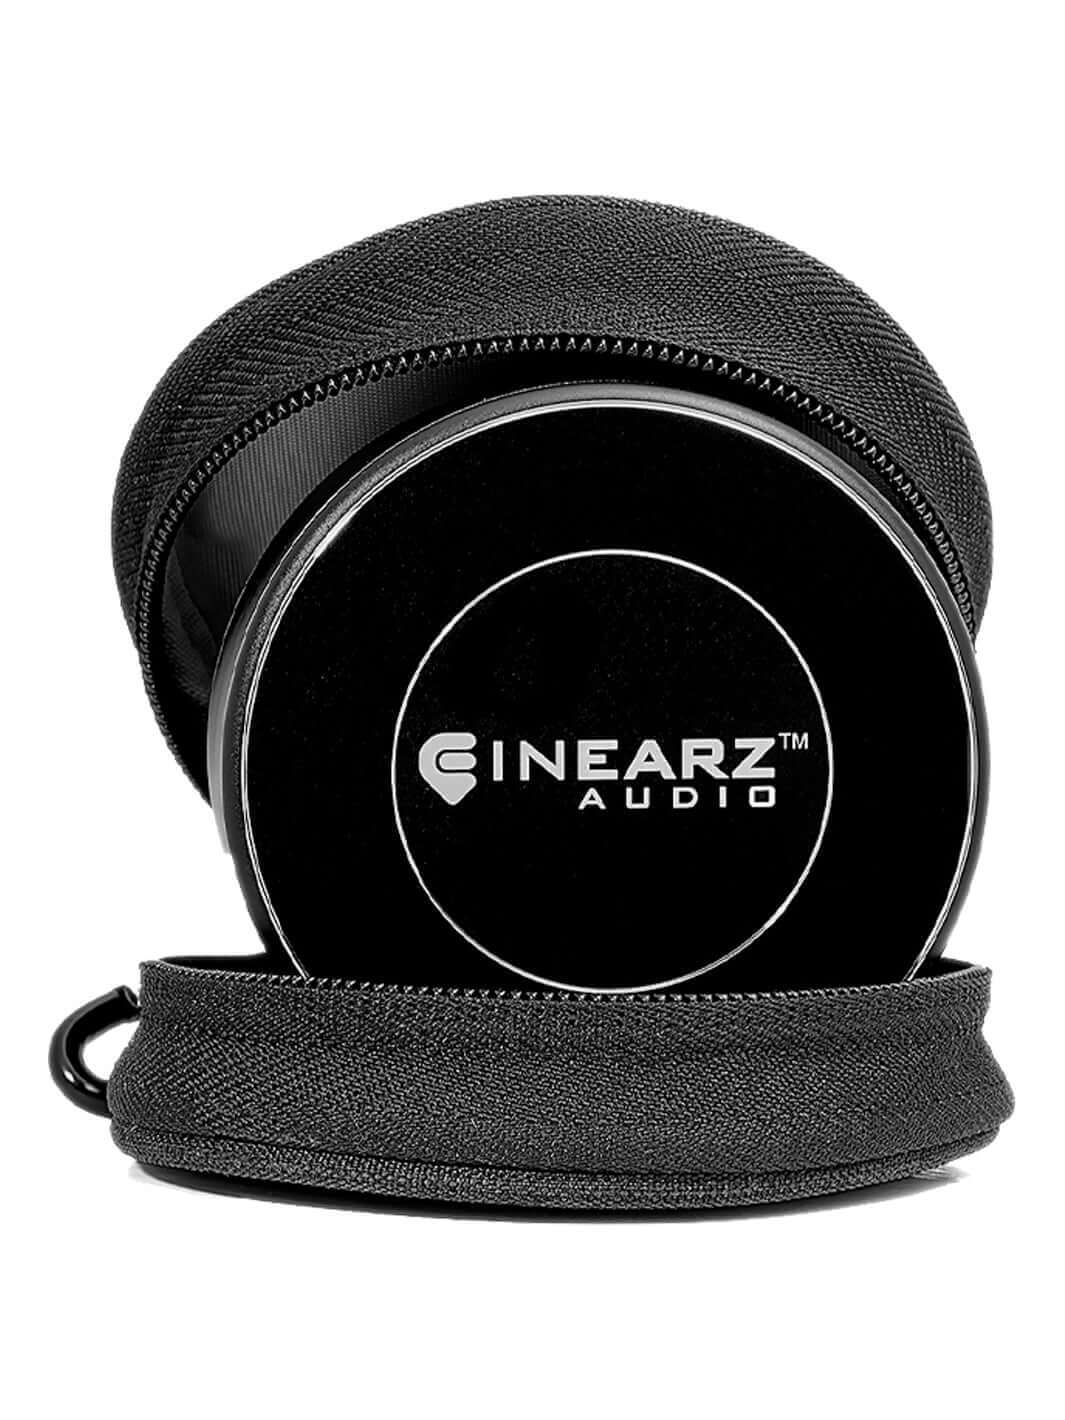 Small Round Metal Case in zipper case| InEarz Audio